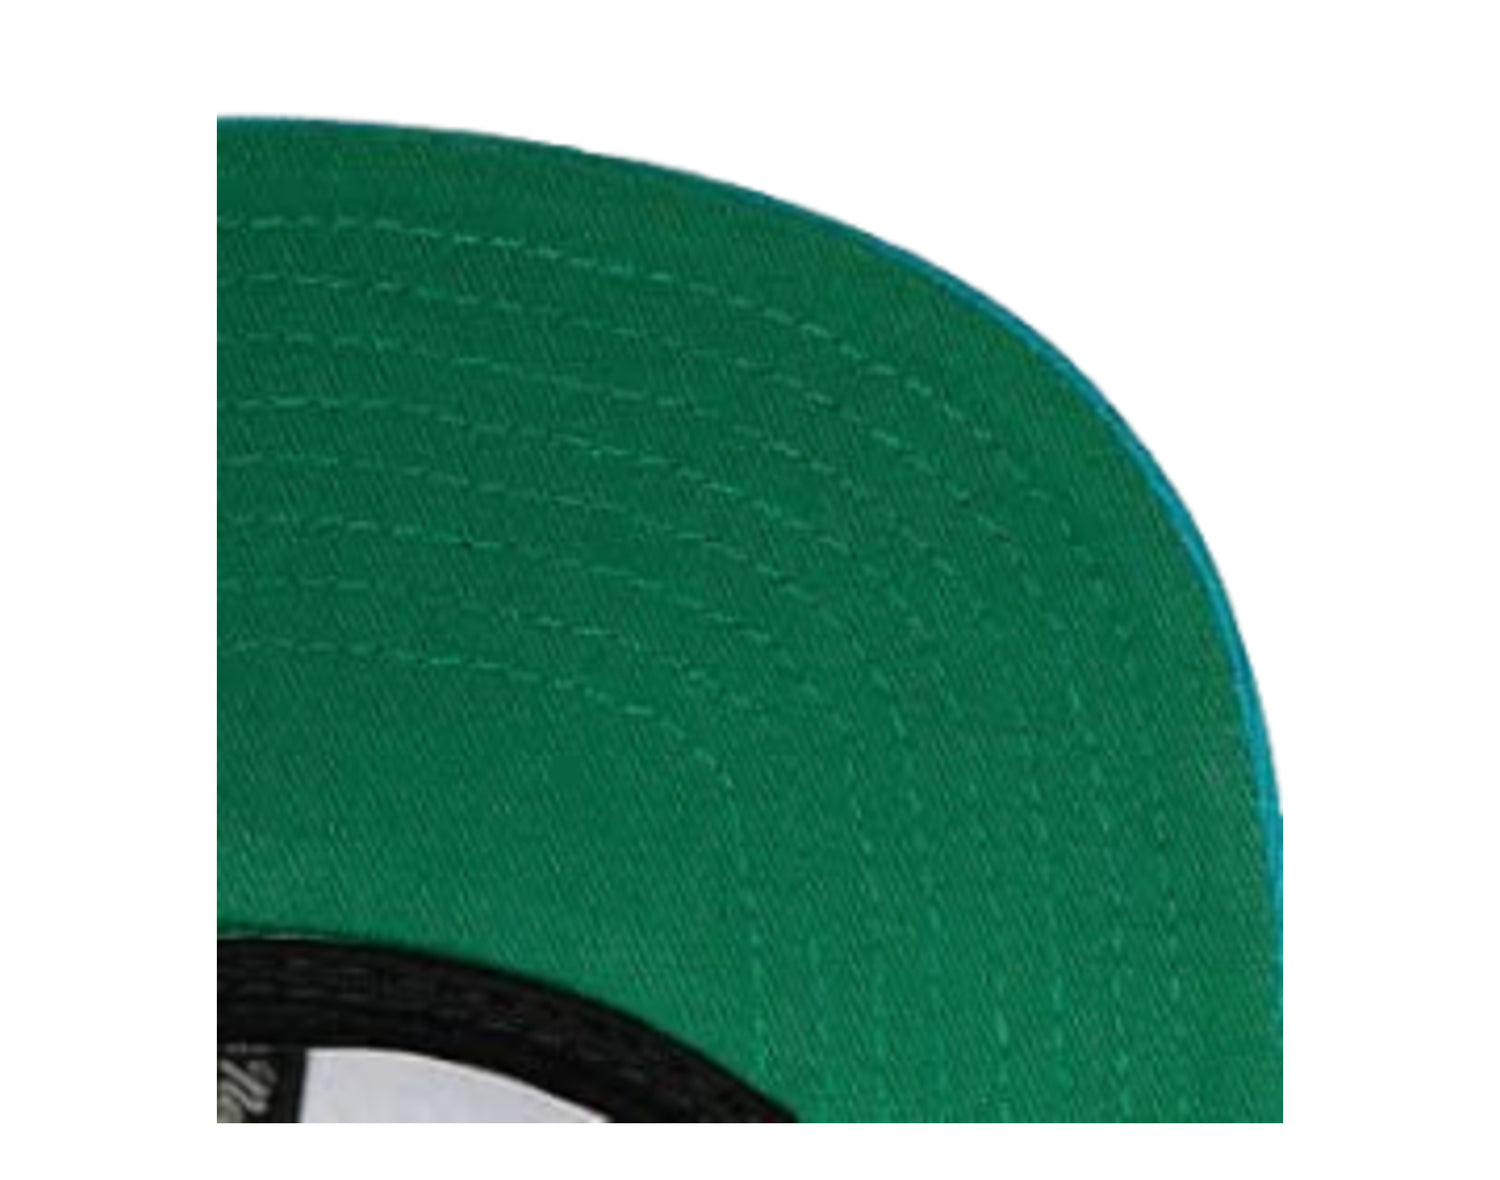 Mitchell & Ness NBA Charlotte Hornets Sharktooth HWC Snapback Hat